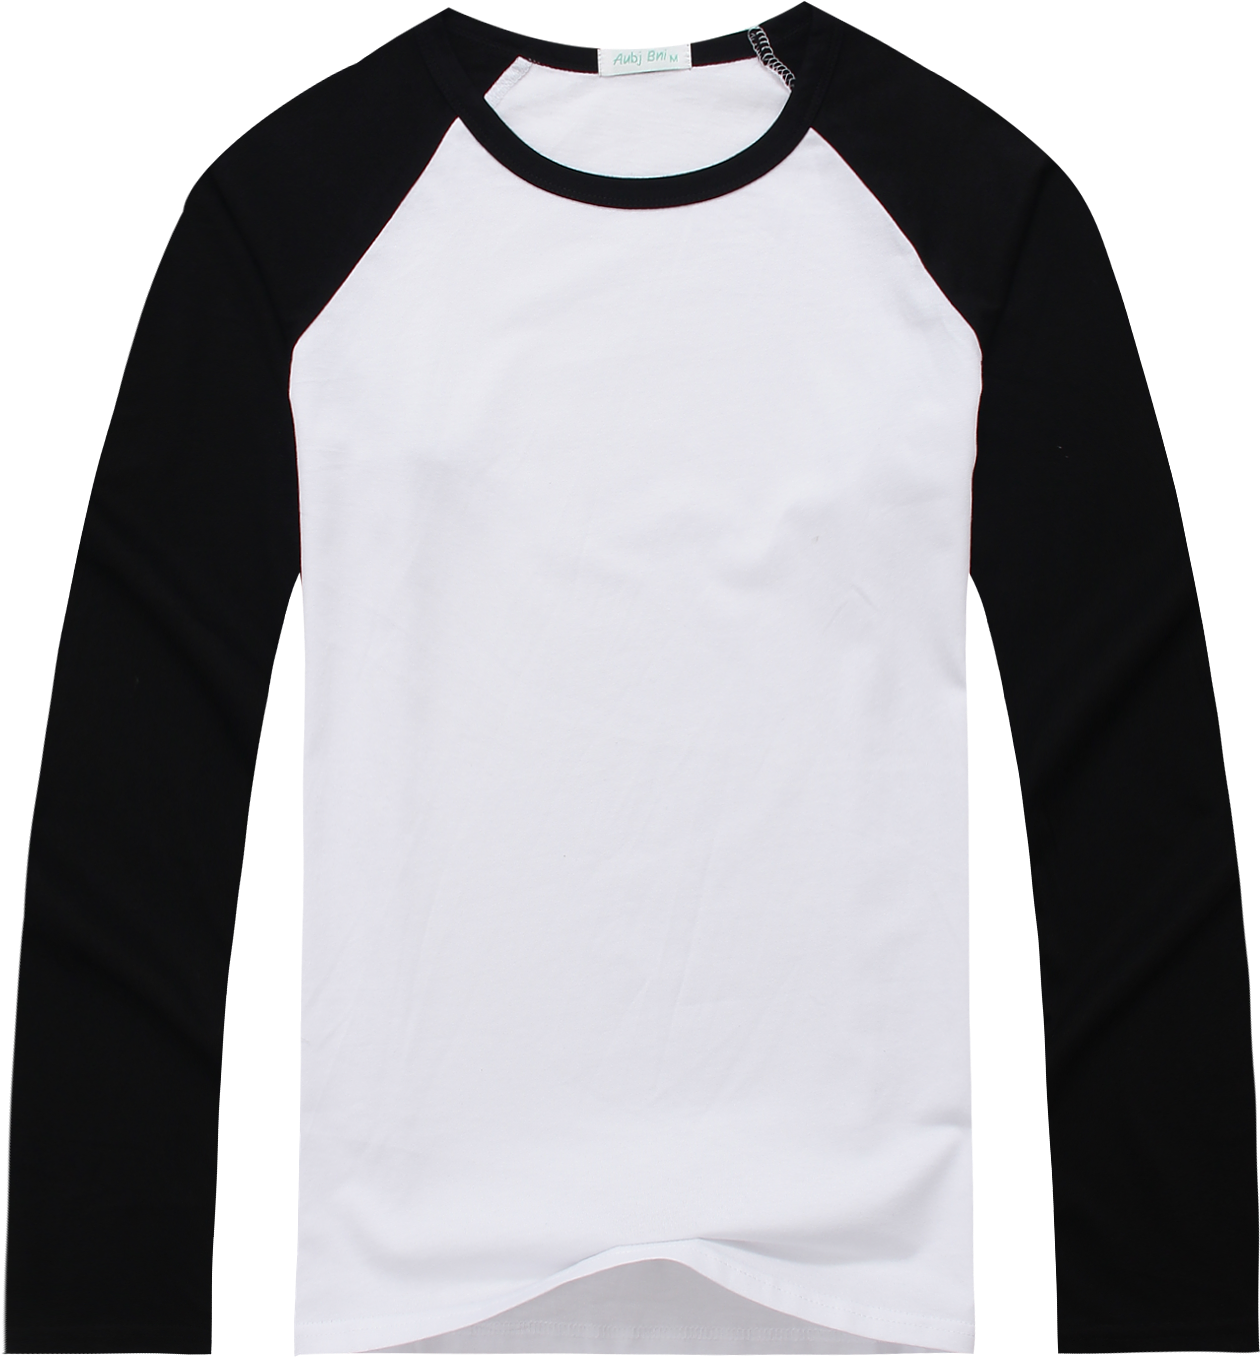 Raglan Sleeve T-Shirt Transparent Image